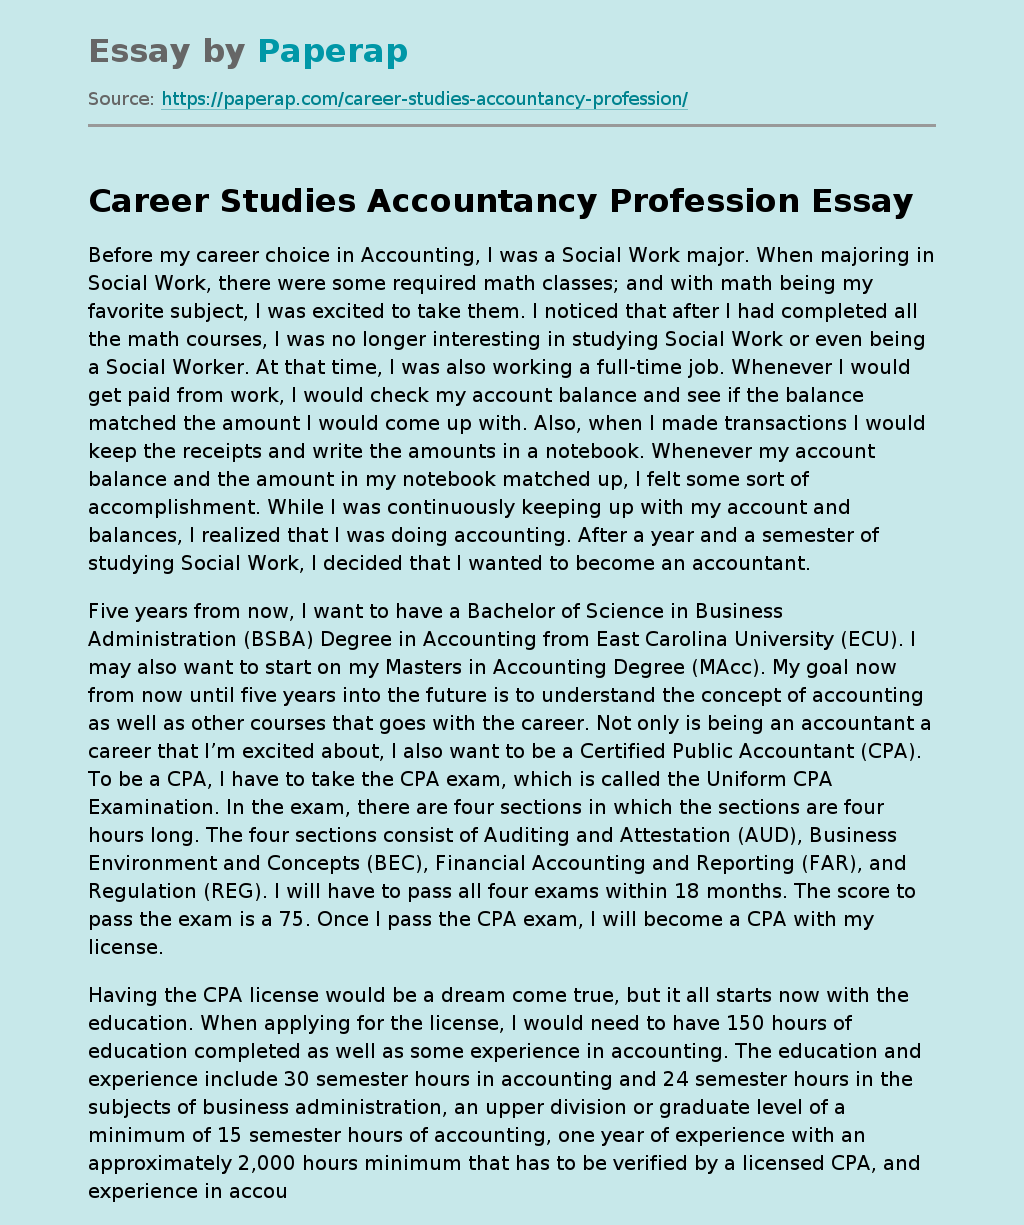 Career Studies Accountancy Profession